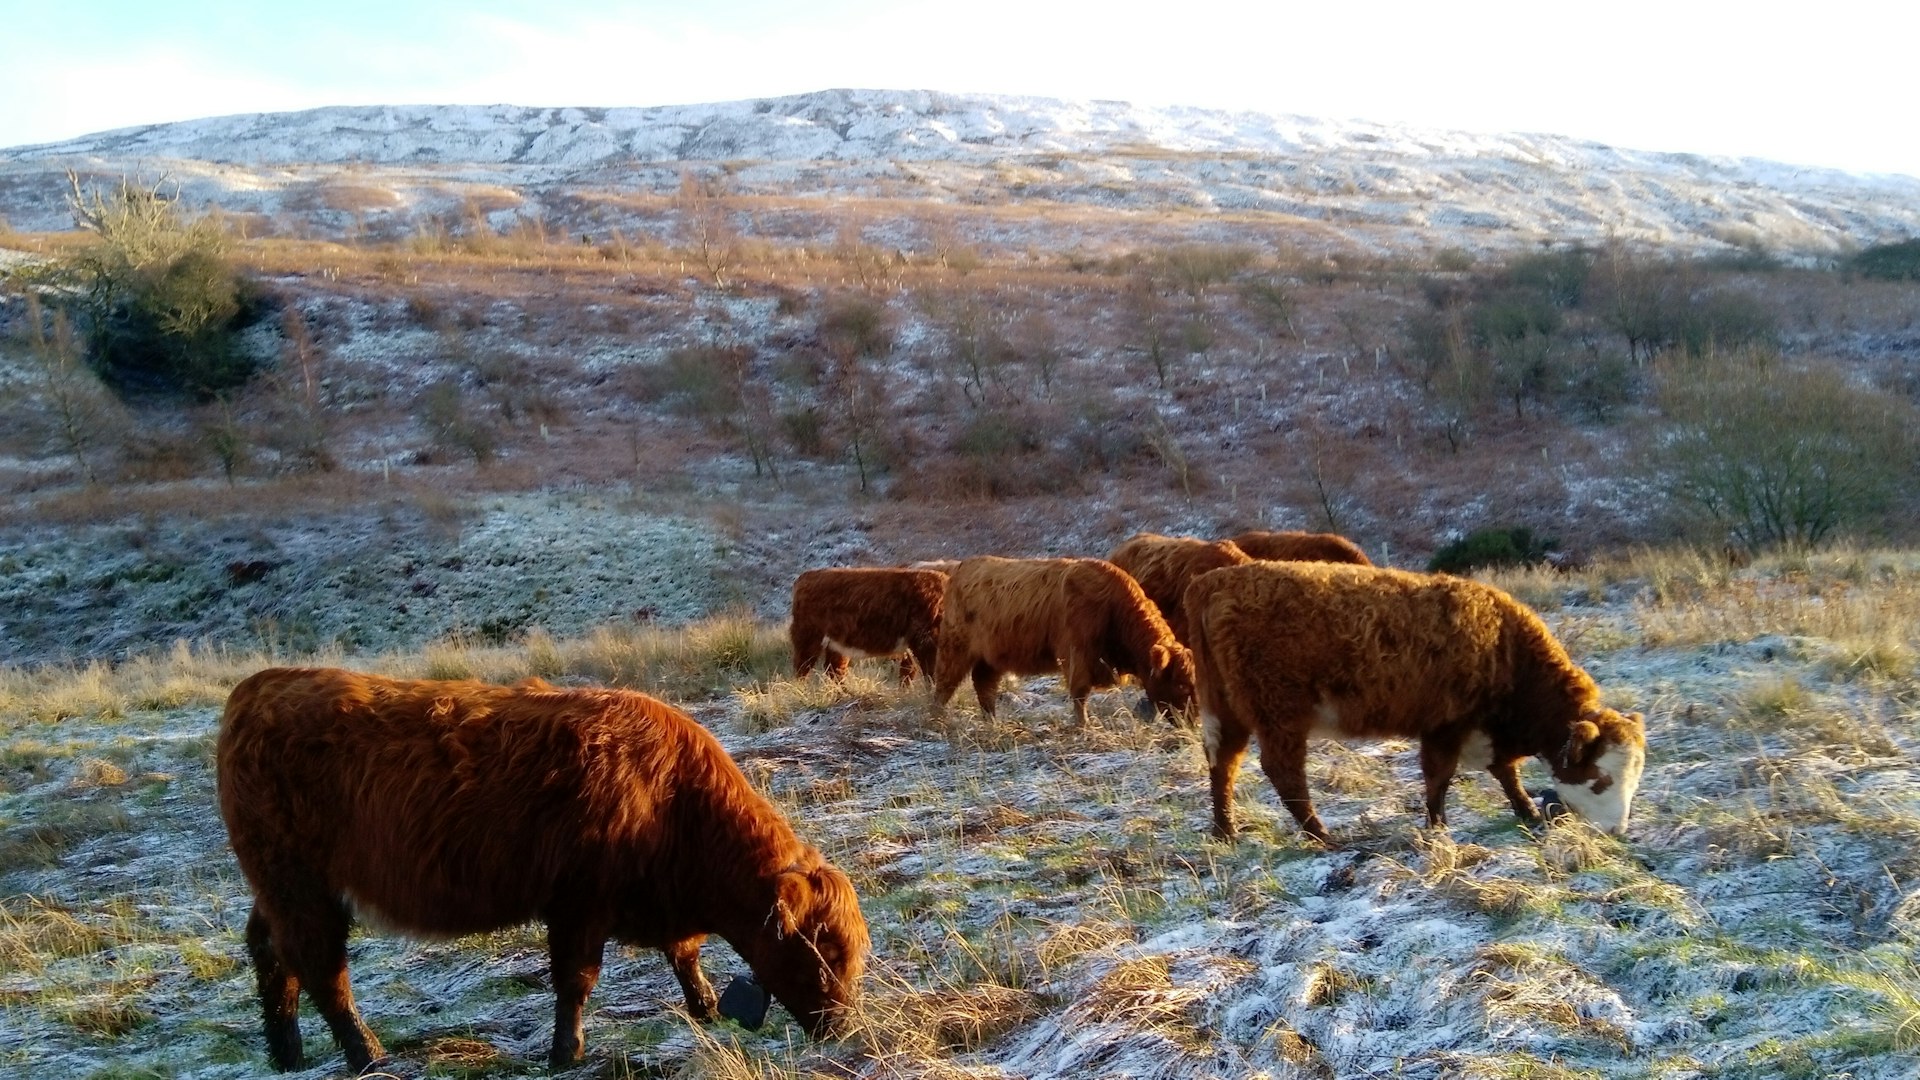 livestock grazing in the snow